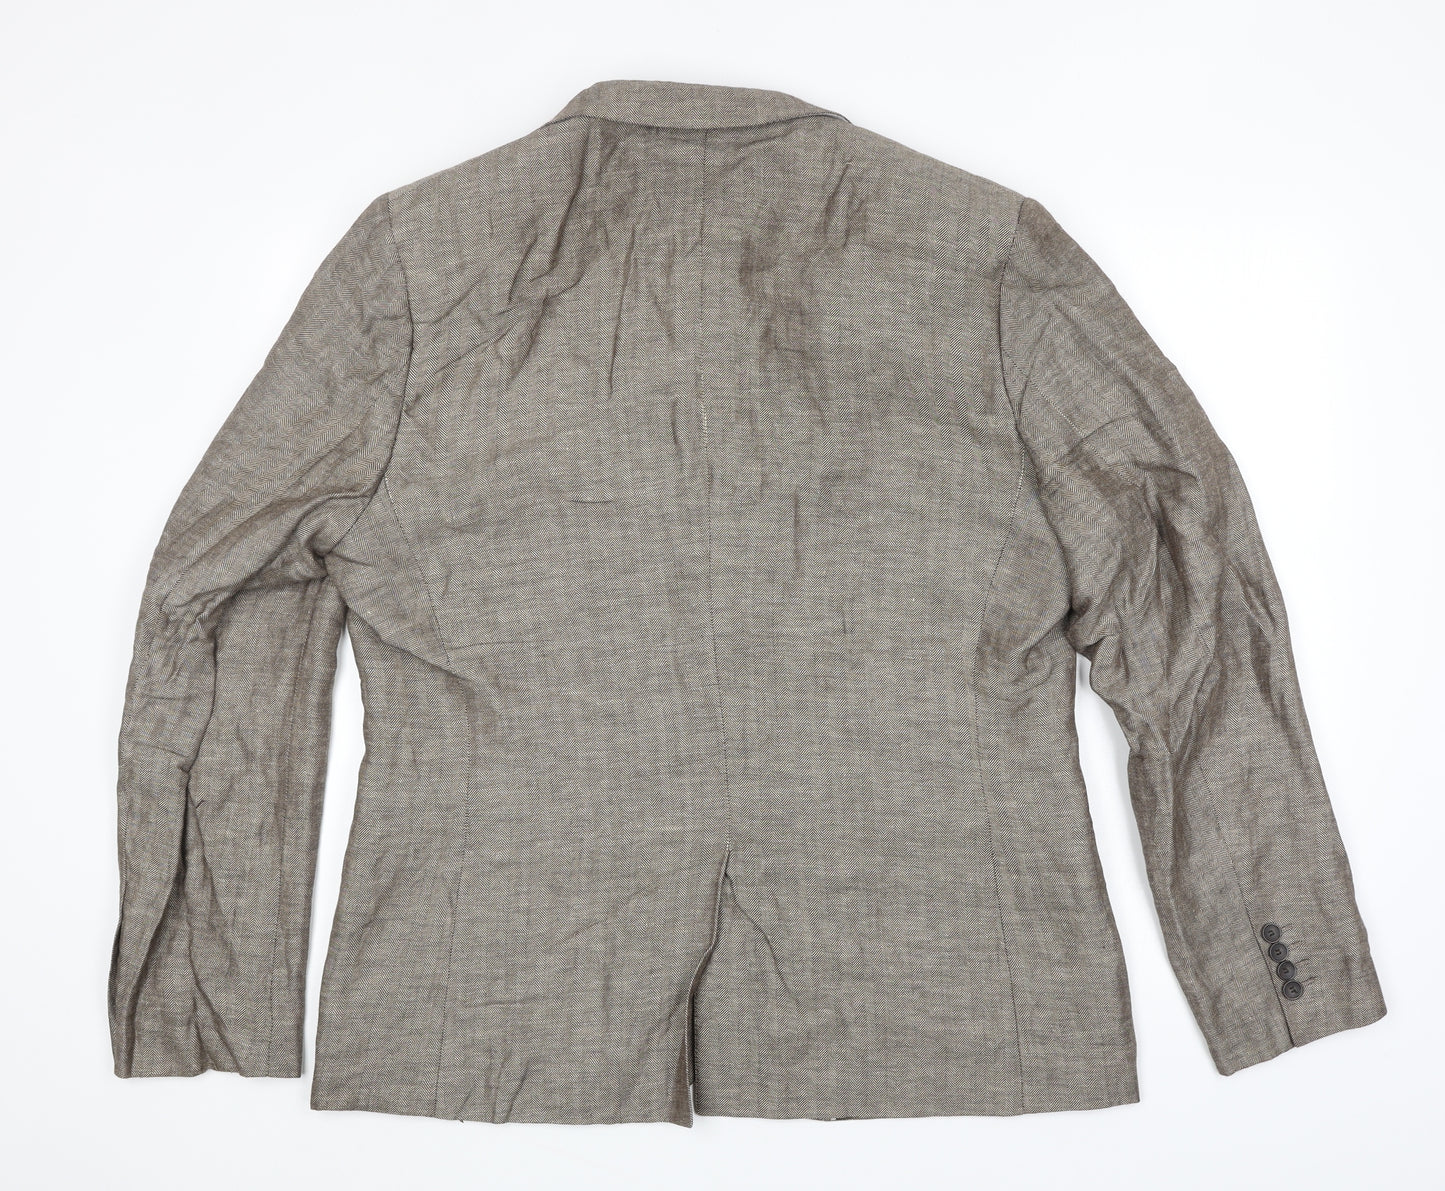 TU Mens Brown Herringbone Jacket Blazer Size XL Button